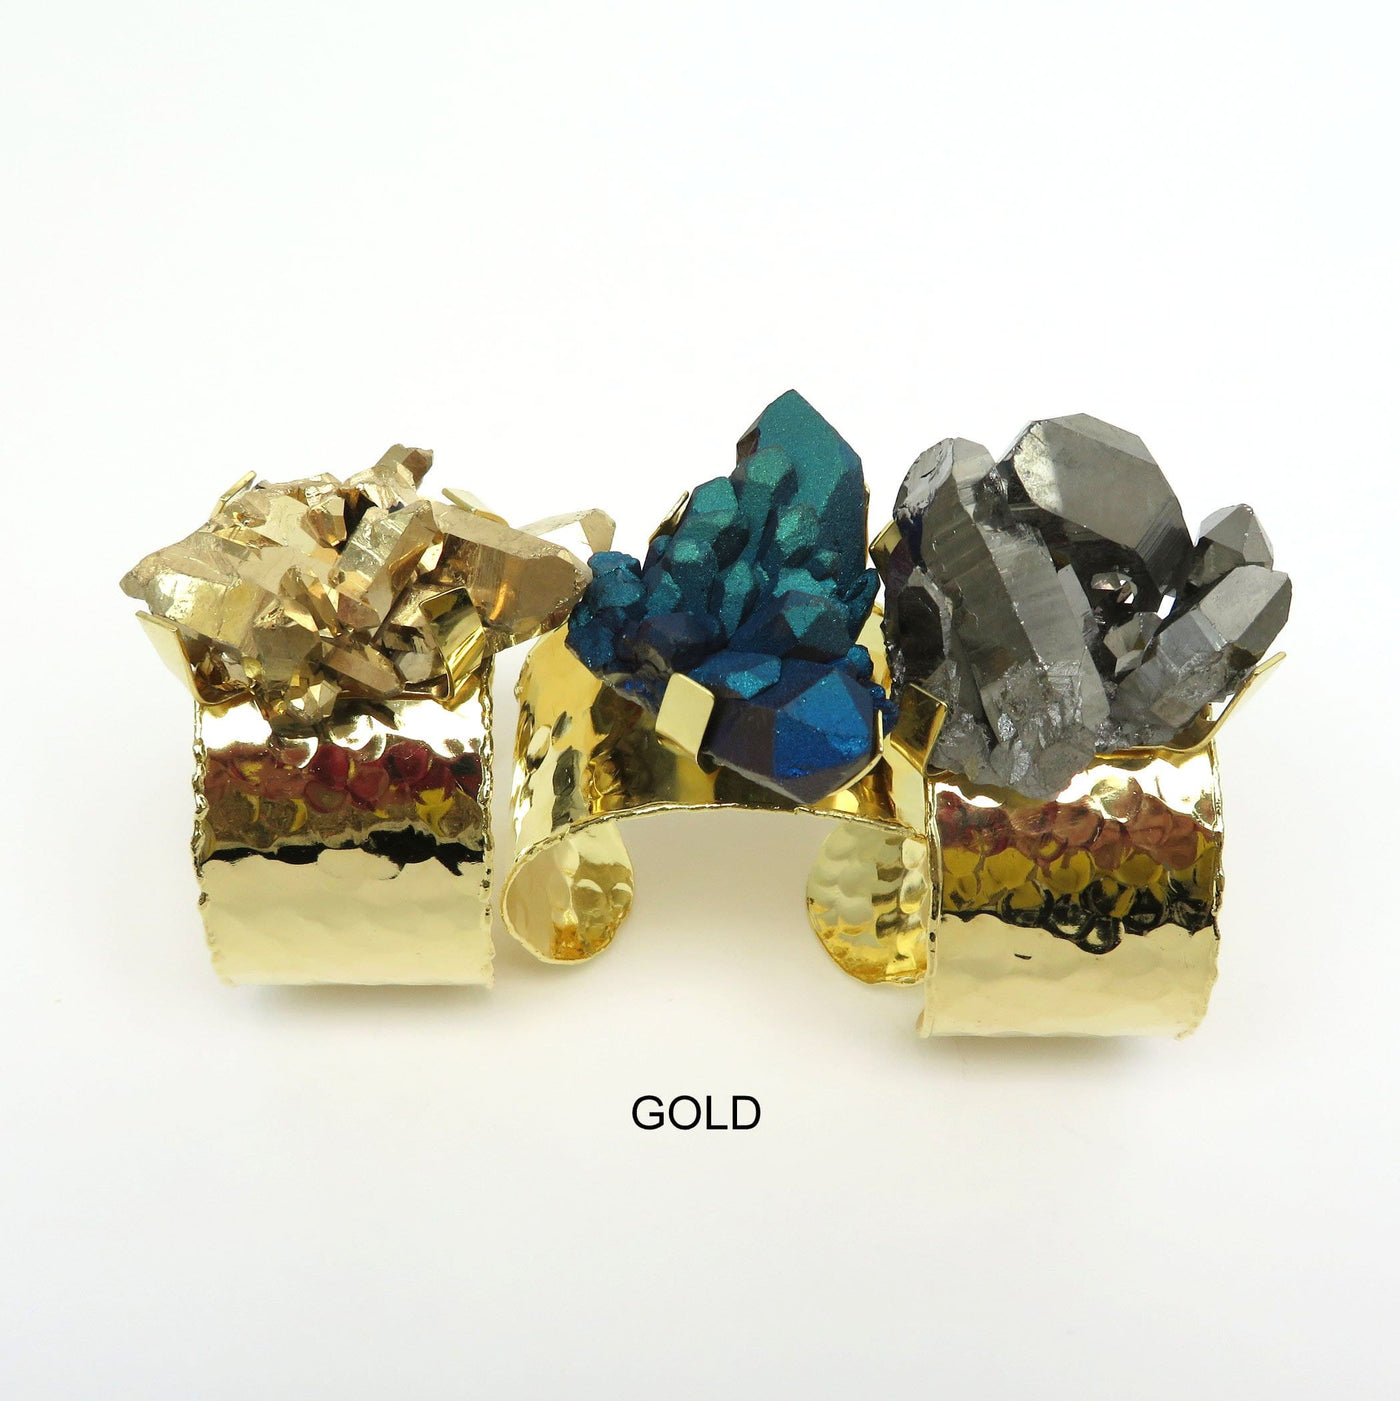 gold variant of crystal cluster bracelet on white background